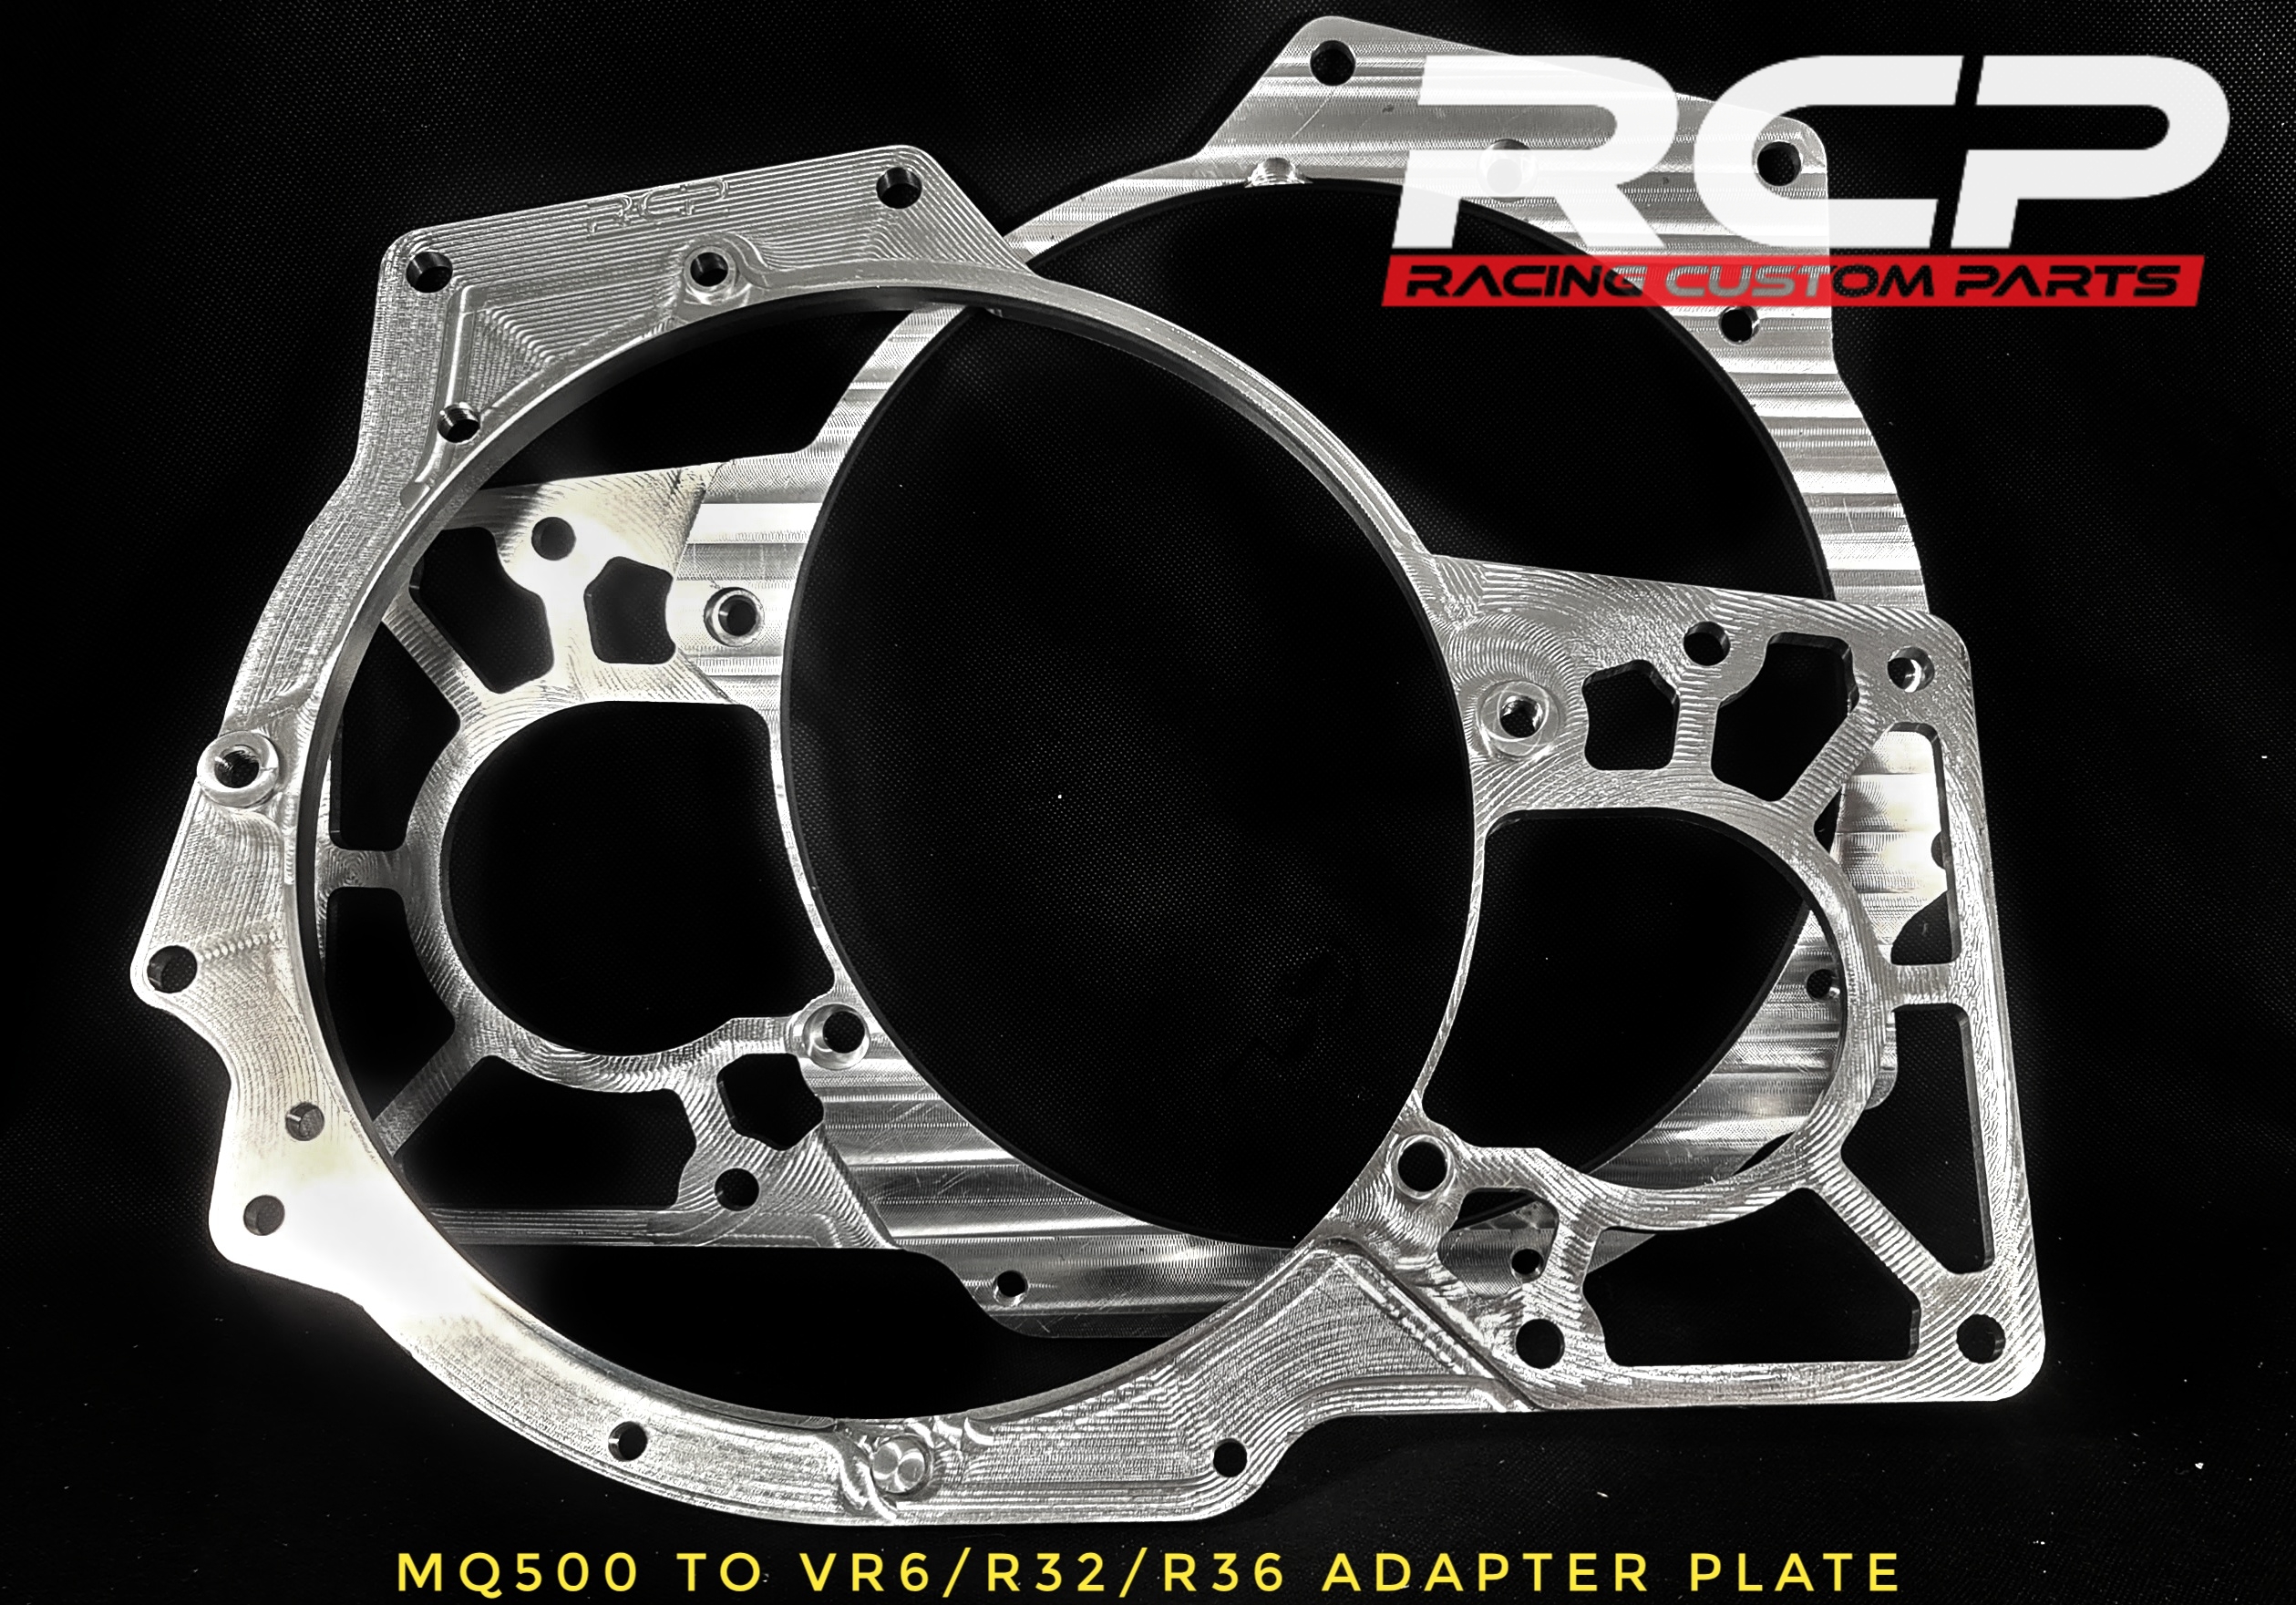 mq500 r32 adapter plate machining bellhousing strong gearbox turbo r36 vr6 rcp racing custom parts billet cnc